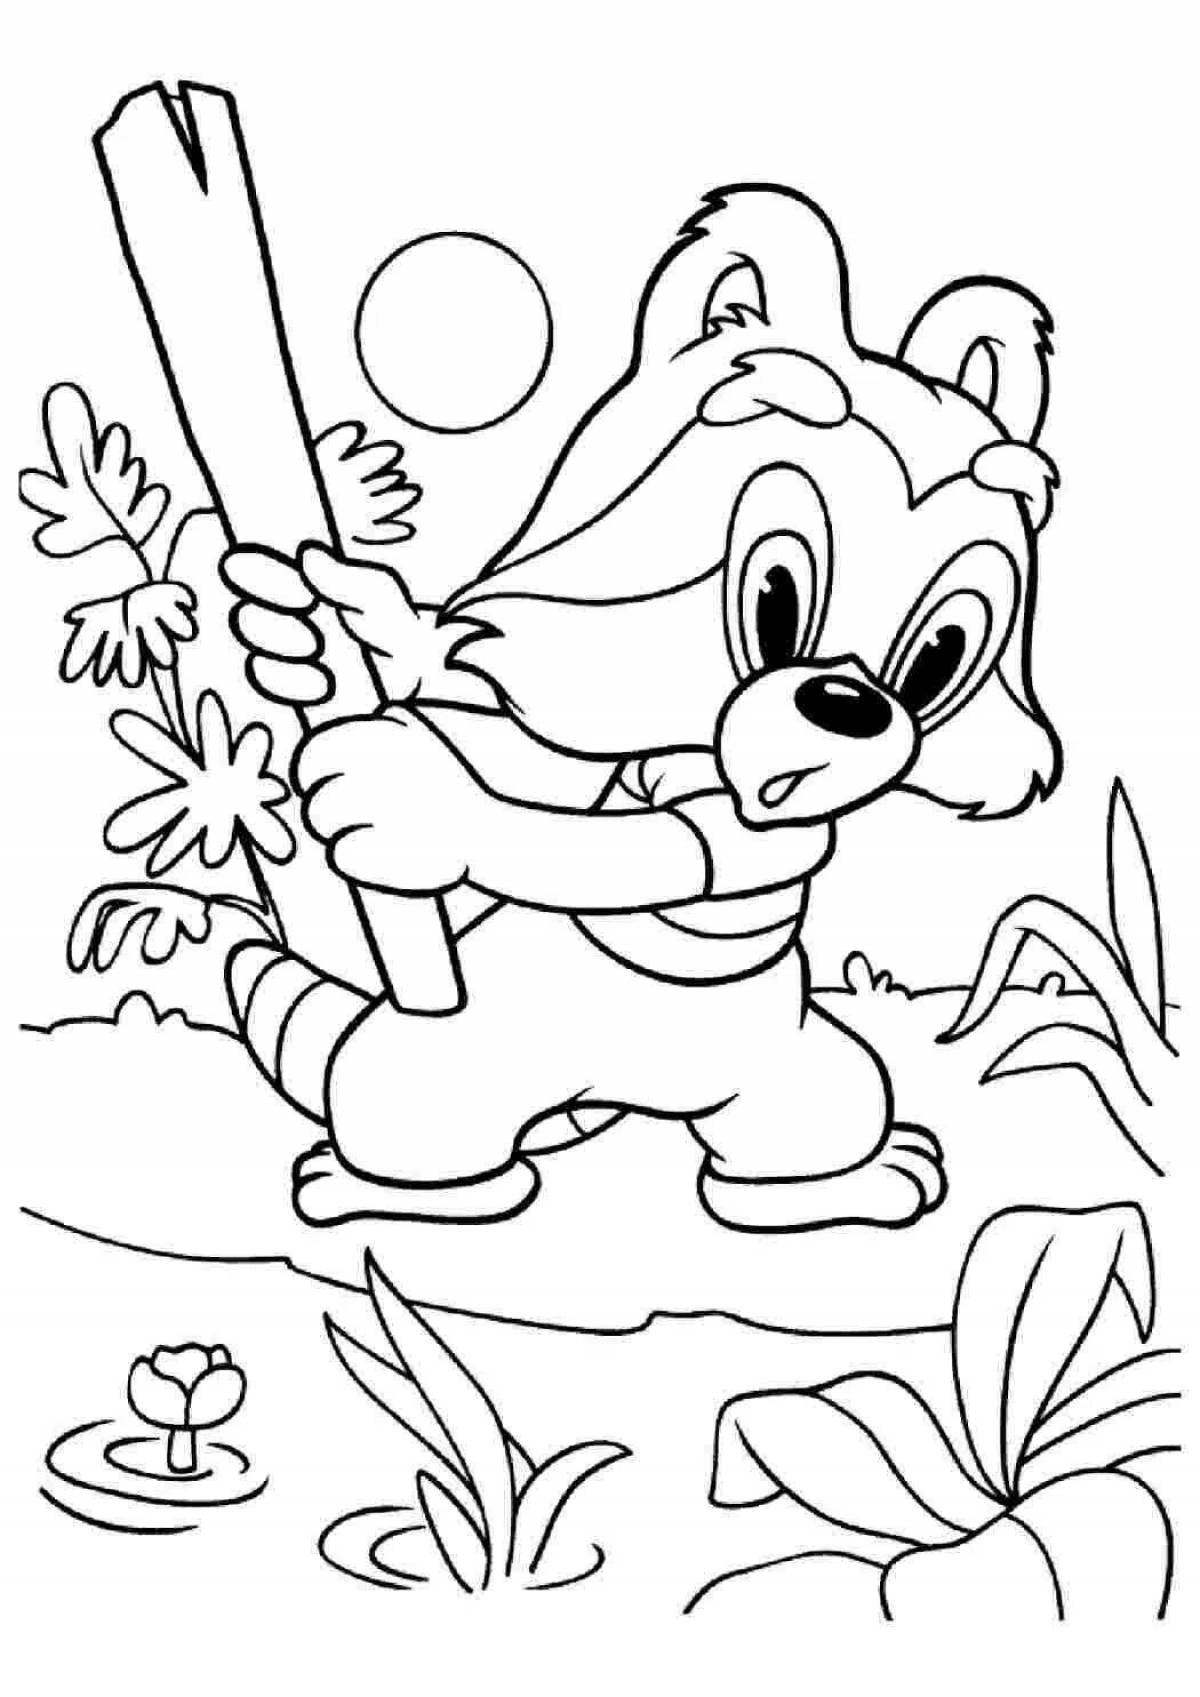 Adorable coloring book for kids cartoon raccoon